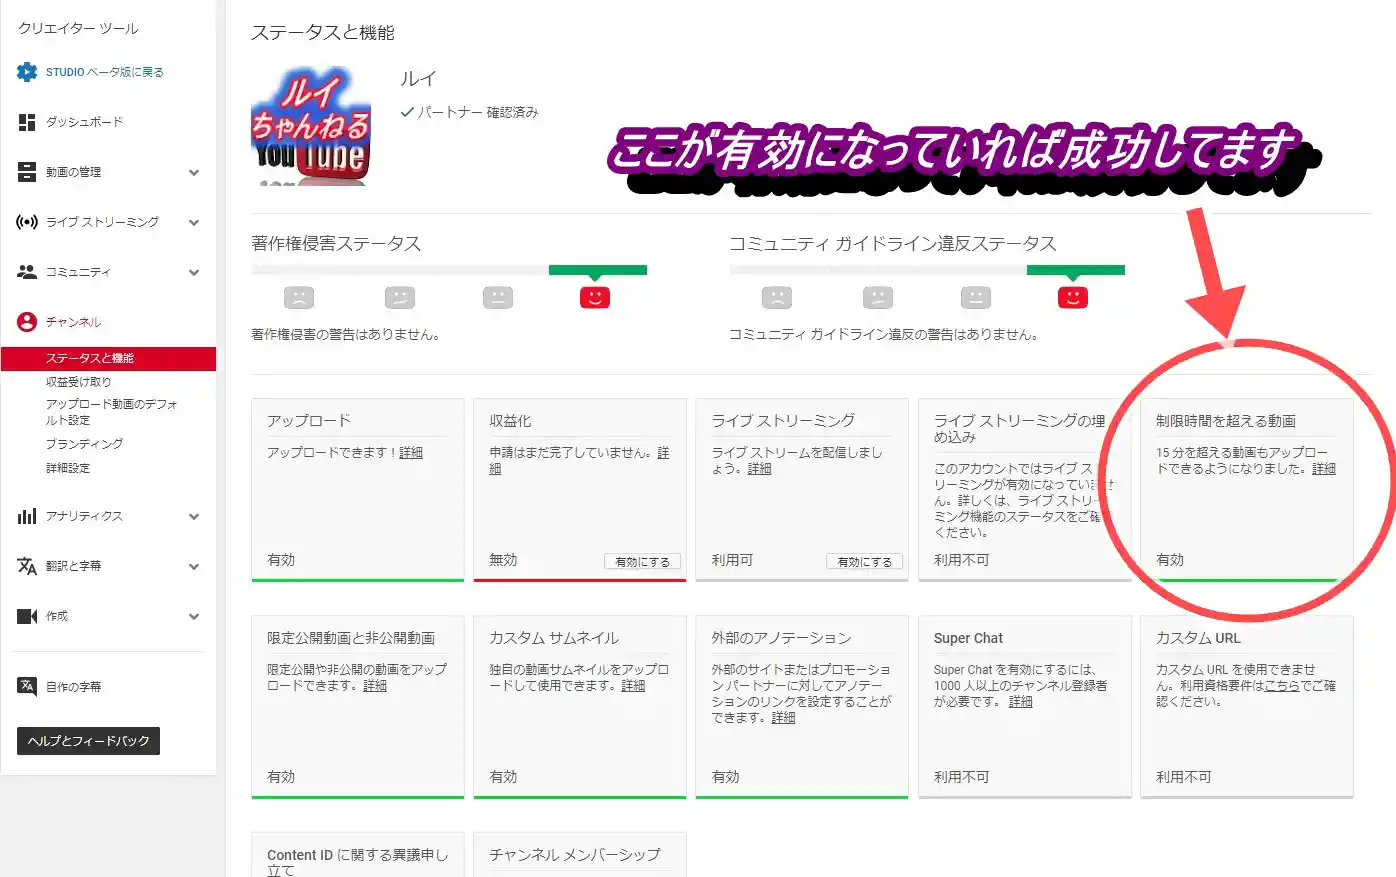 youtube 制限時間を超える動画 19.10.12-2.jpg